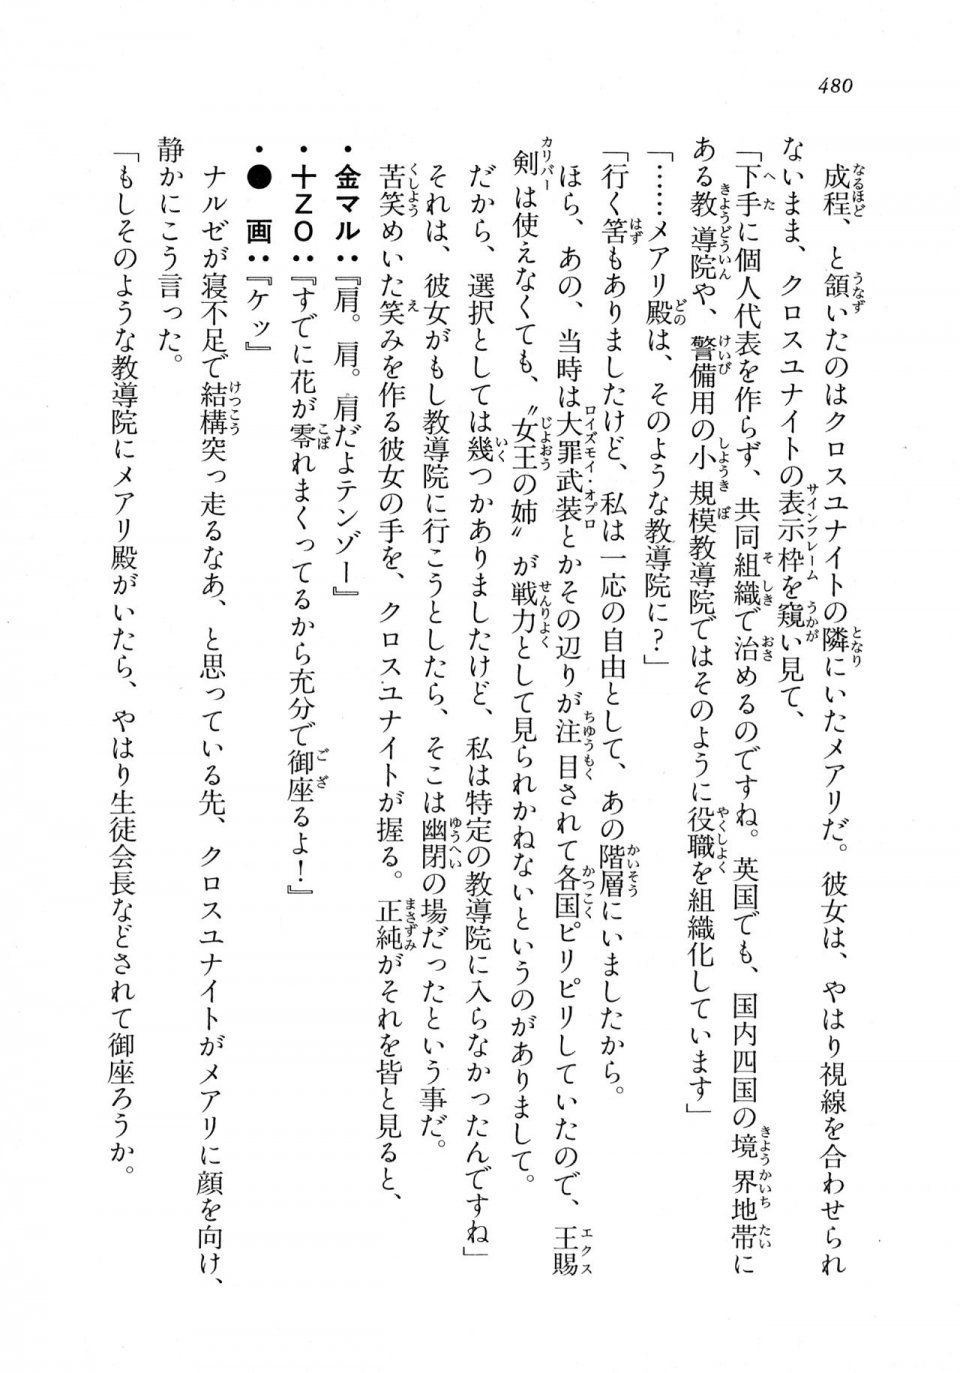 Kyoukai Senjou no Horizon LN Vol 18(7C) Part 1 - Photo #480